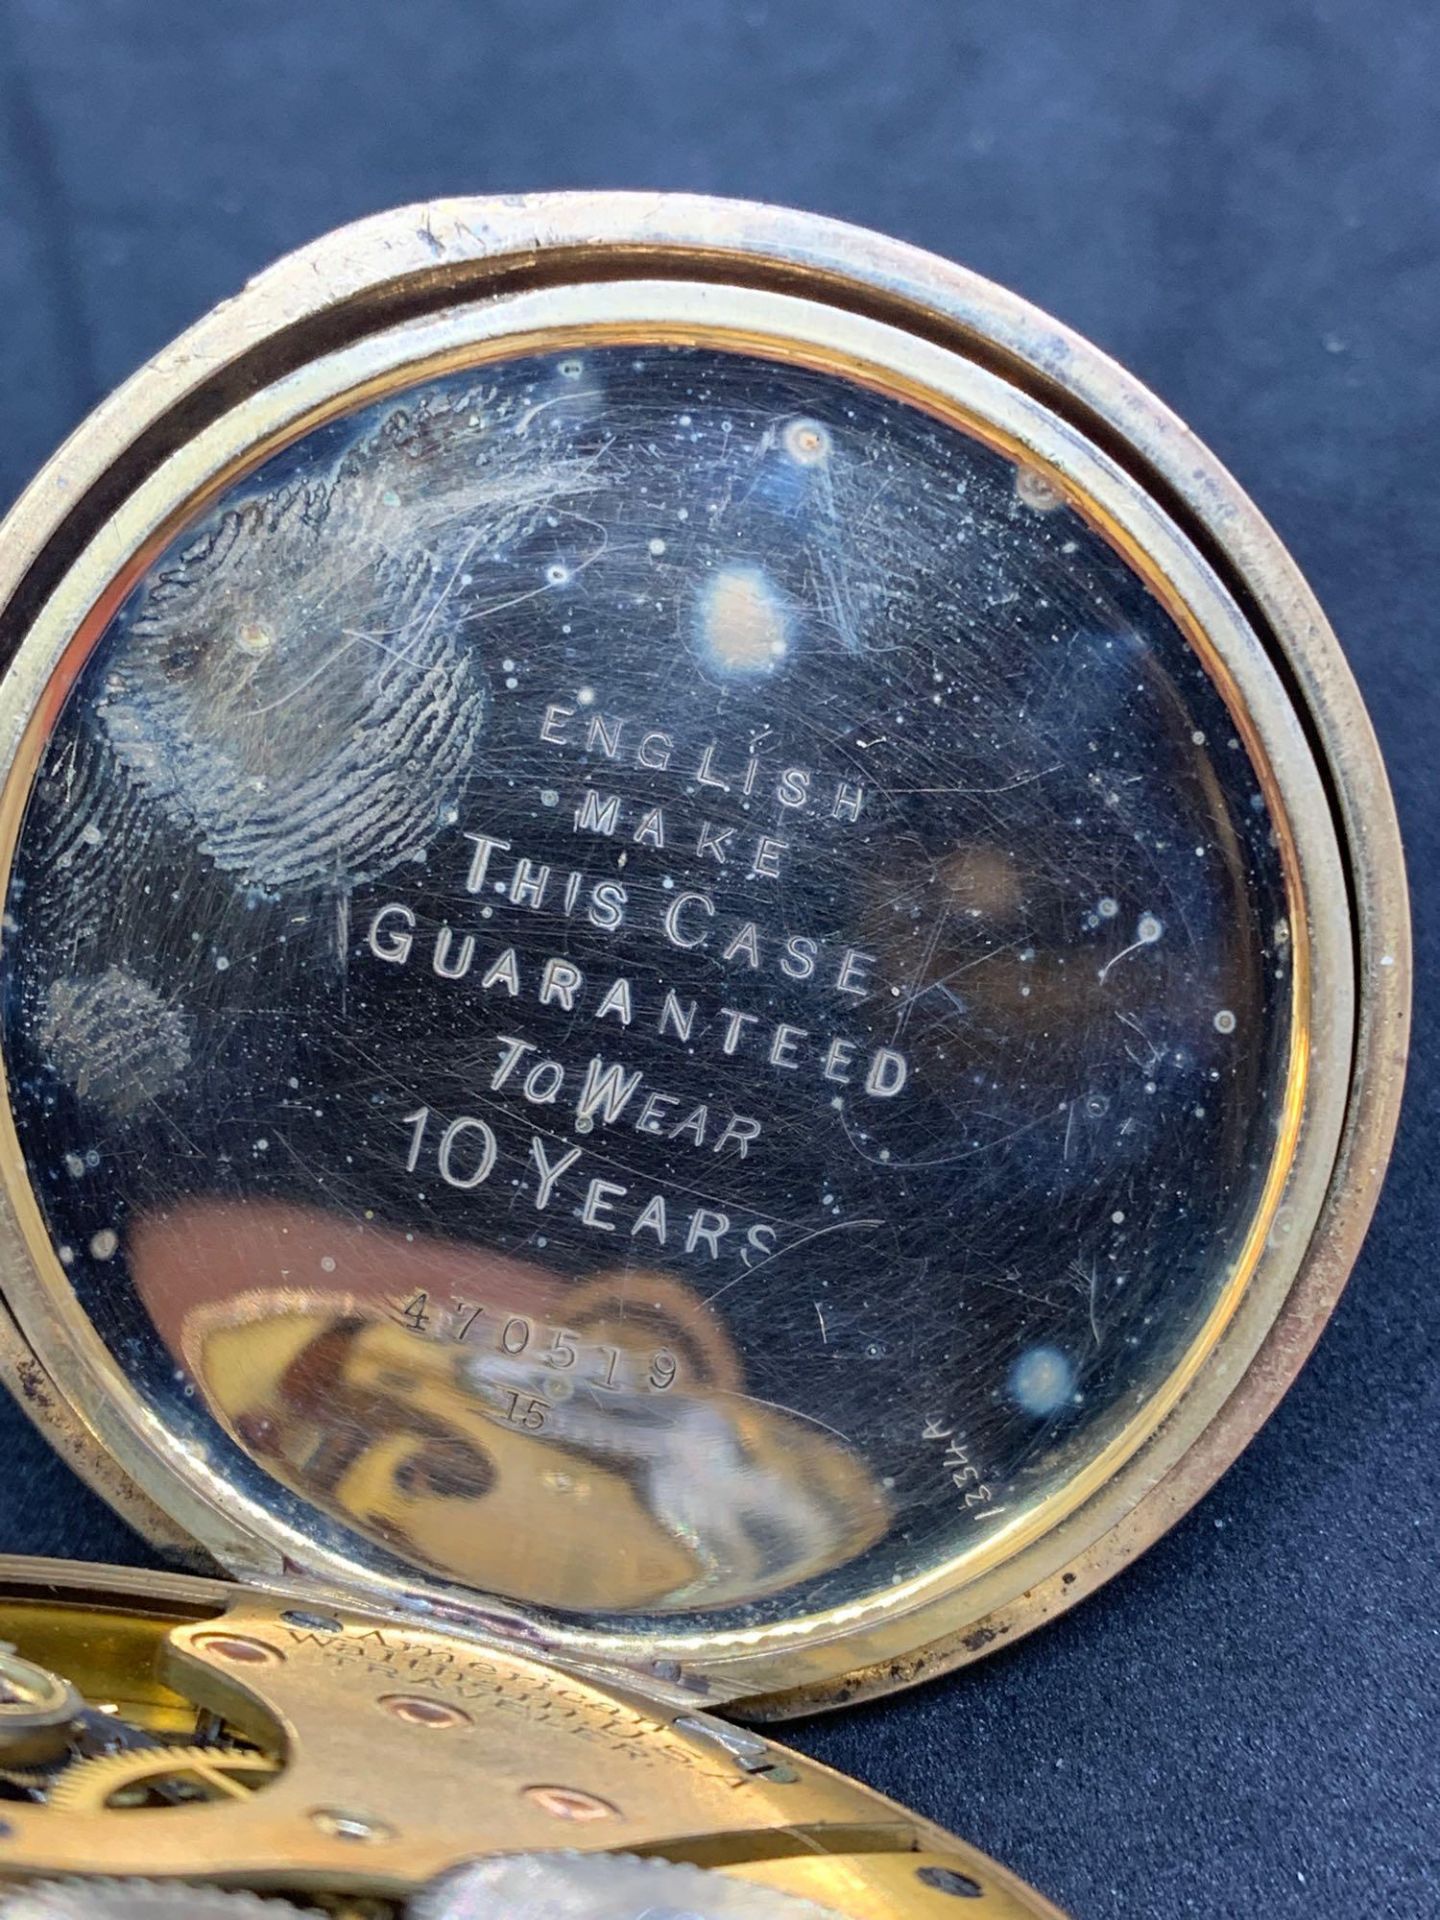 Waltham USA gold coloured pocket watch - Image 5 of 5